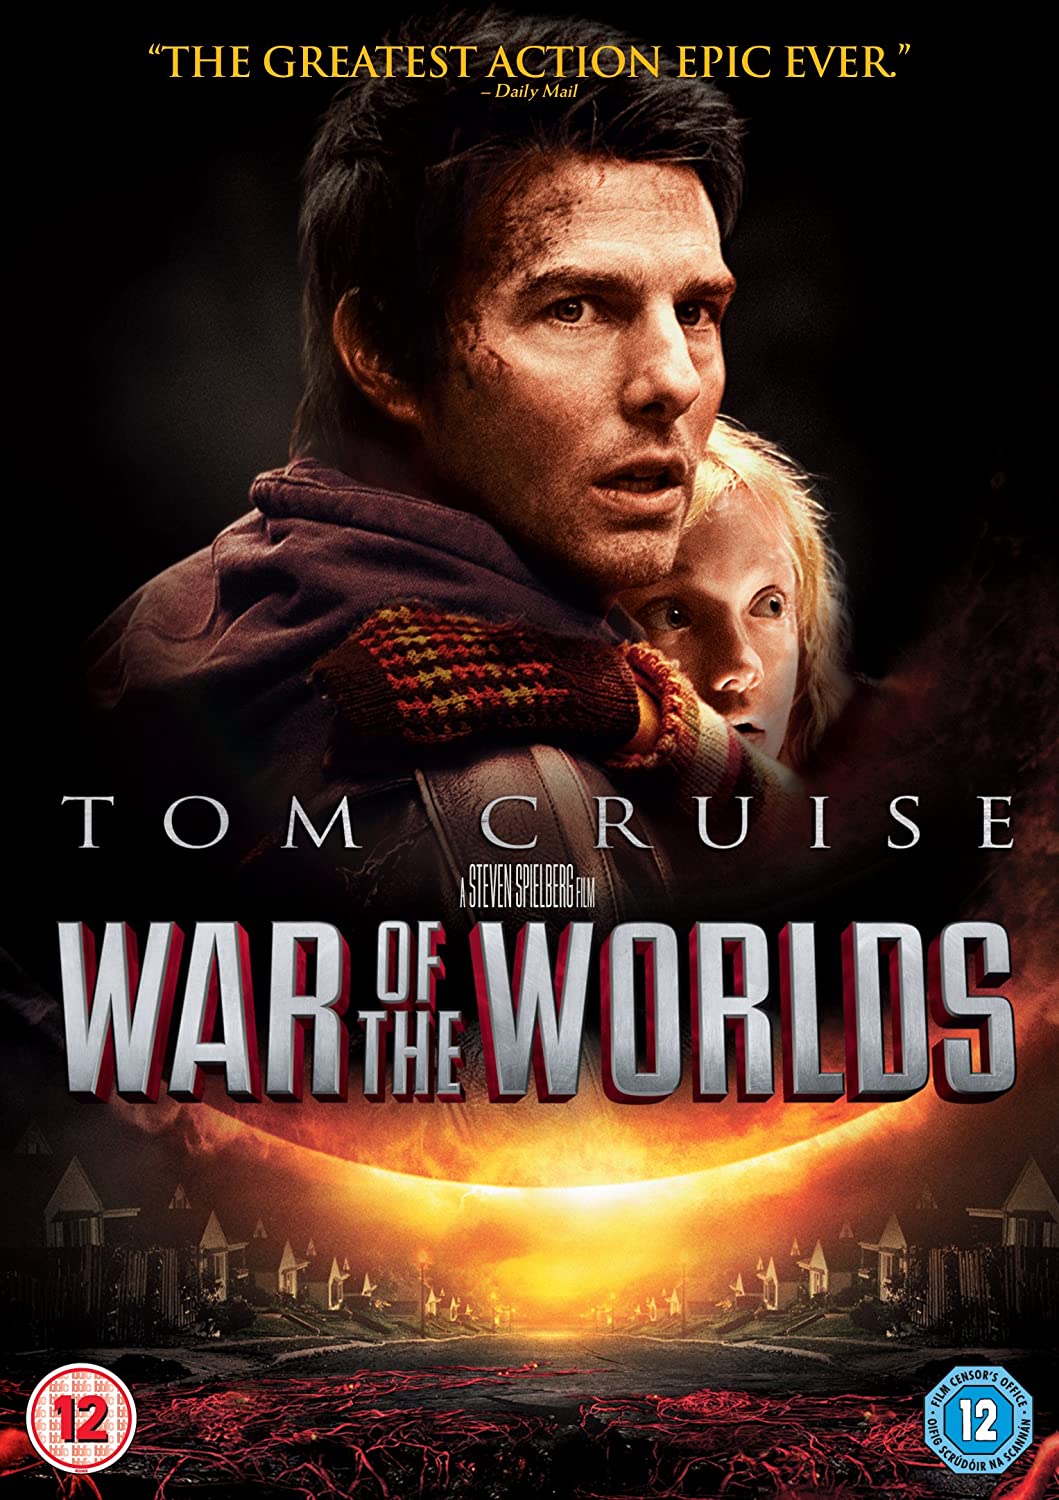 Stiahni si Filmy CZ/SK dabing Valka svetu / War of the Worlds (2005)(CZ/EN) = CSFD 72%